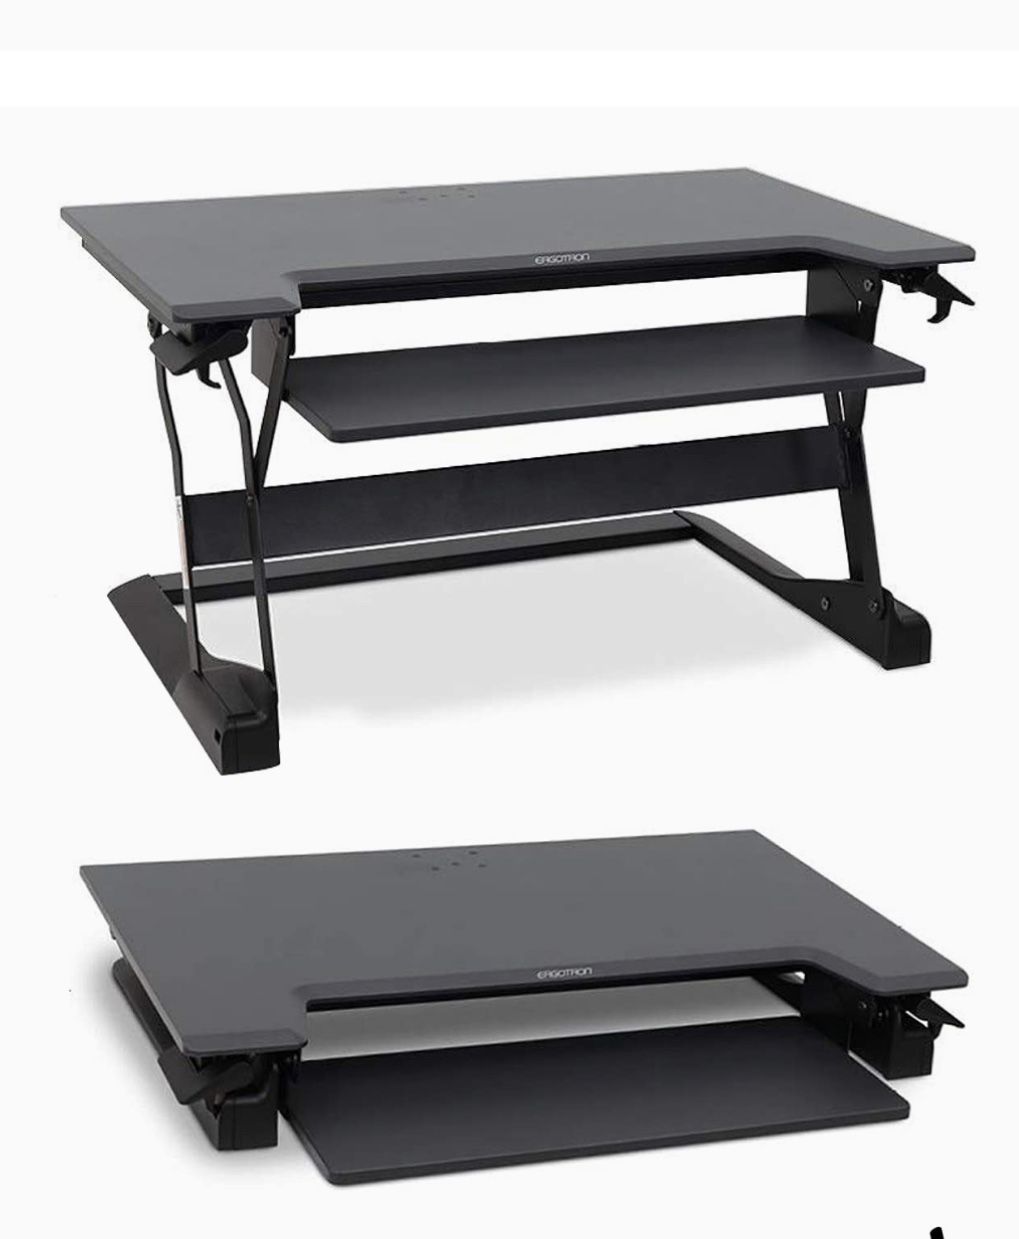 WorkFit-TL Standing Desk Converter 35inch Width( Original Price $500)